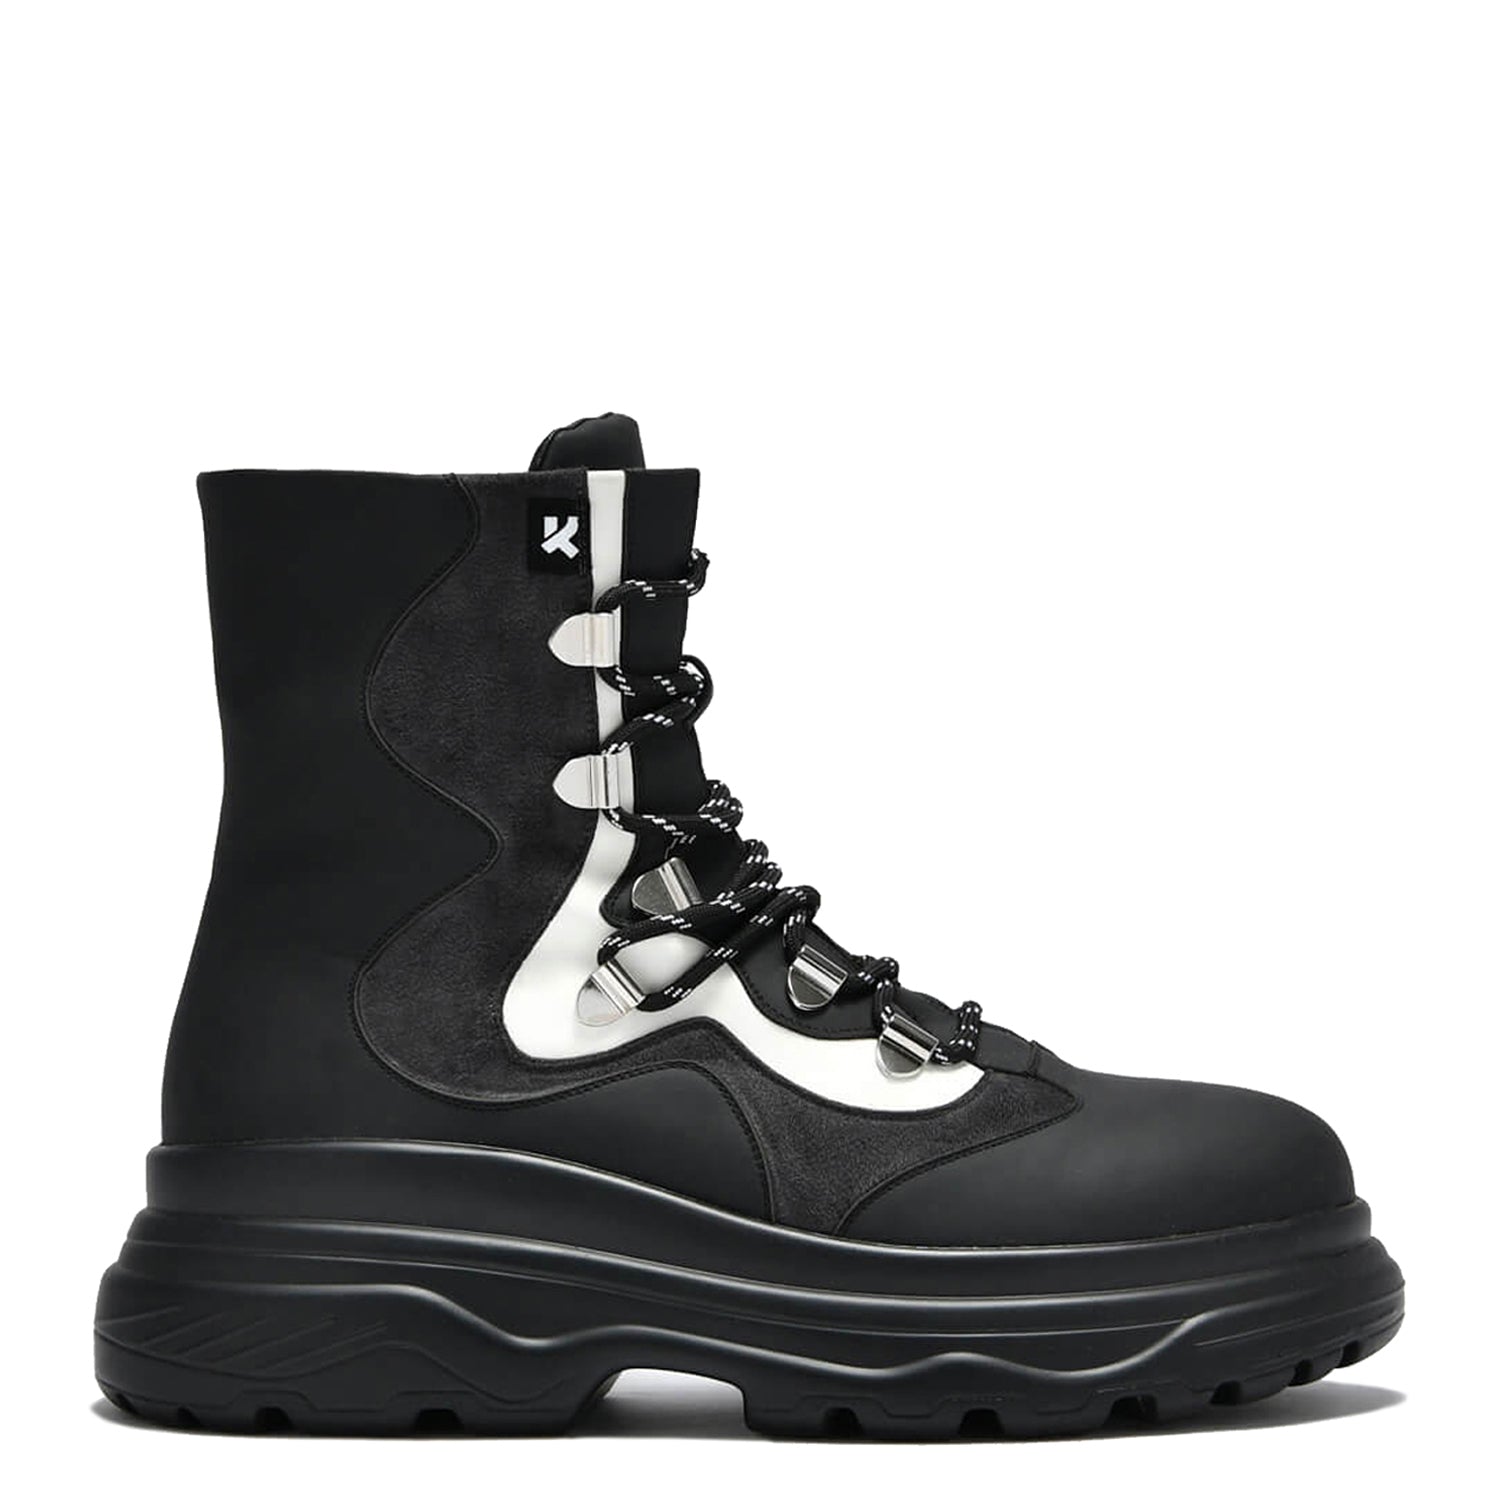 The KSI Men's Trail Boots – KOI footwear